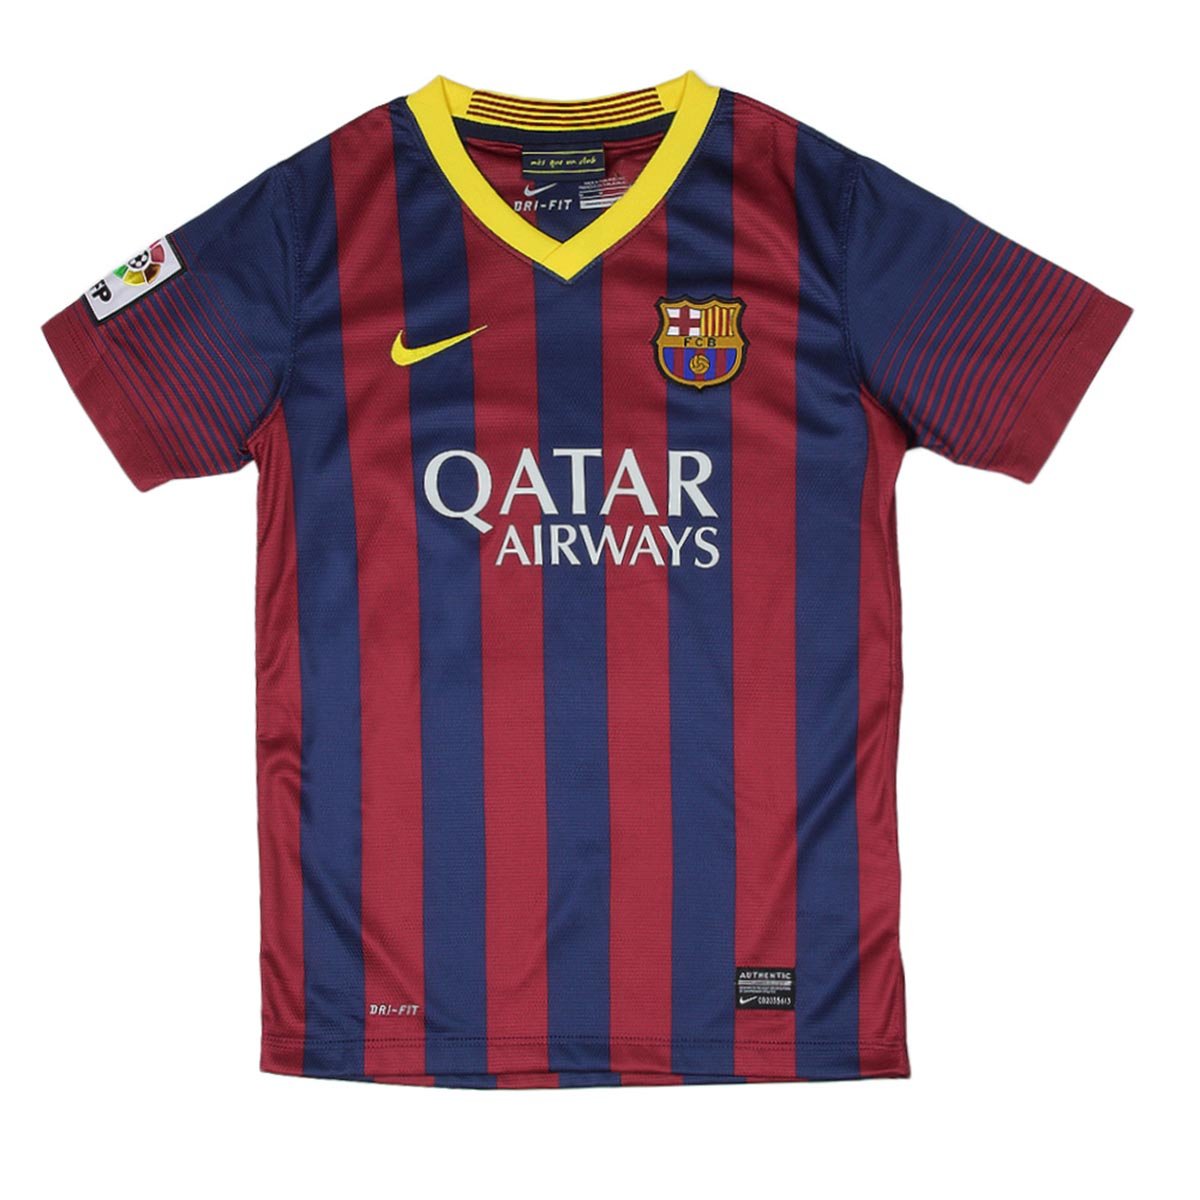 Buy Nike FC Barcelona Home Jersey 2013/14 (Boys Junior) Online